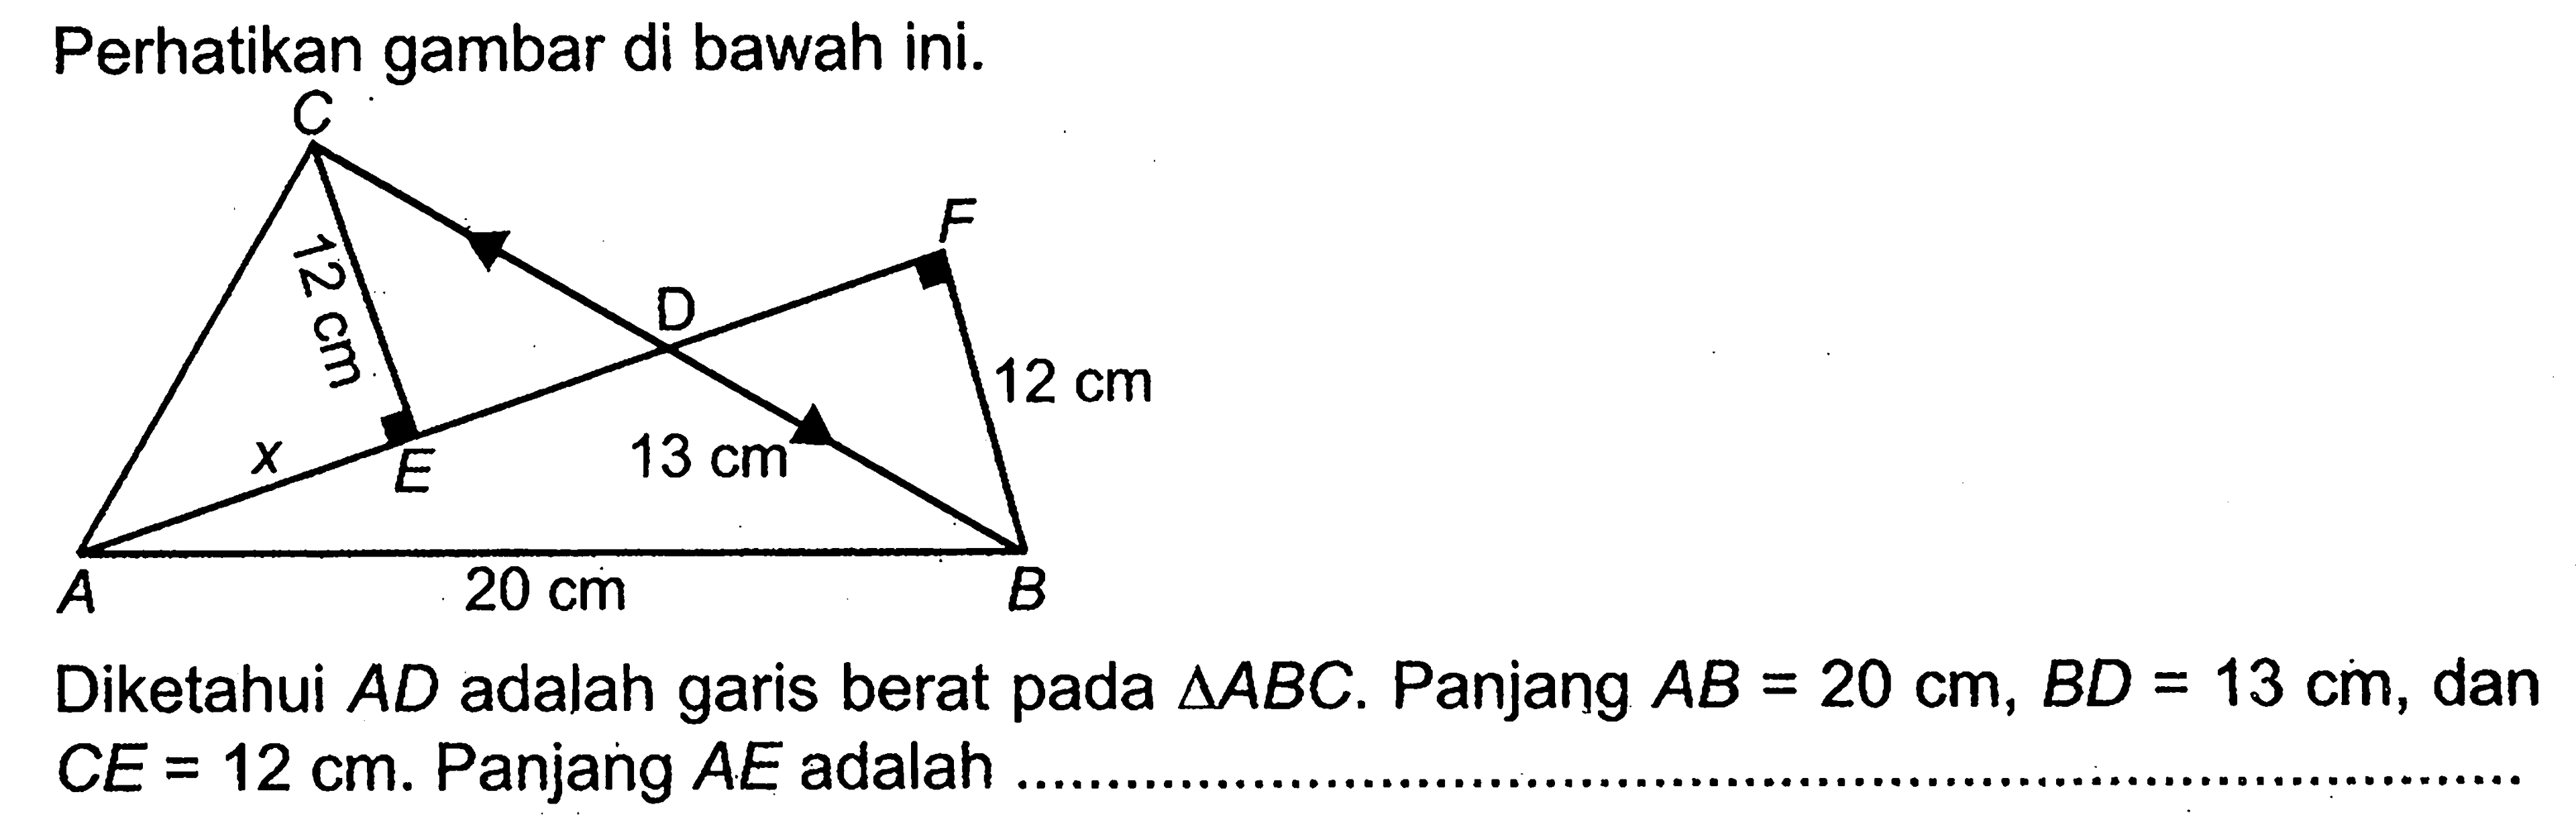 Perhatikan gambar di bawah ini. C F 12 cm D 12 cm E 13 cm A 20 cm BDiketahui  AD  adalah garis berat pada  segitiga ABC . Panjang  AB=20 cm, BD=13 cm , dan  CE=12 cm .  Panjang  AE  adalah